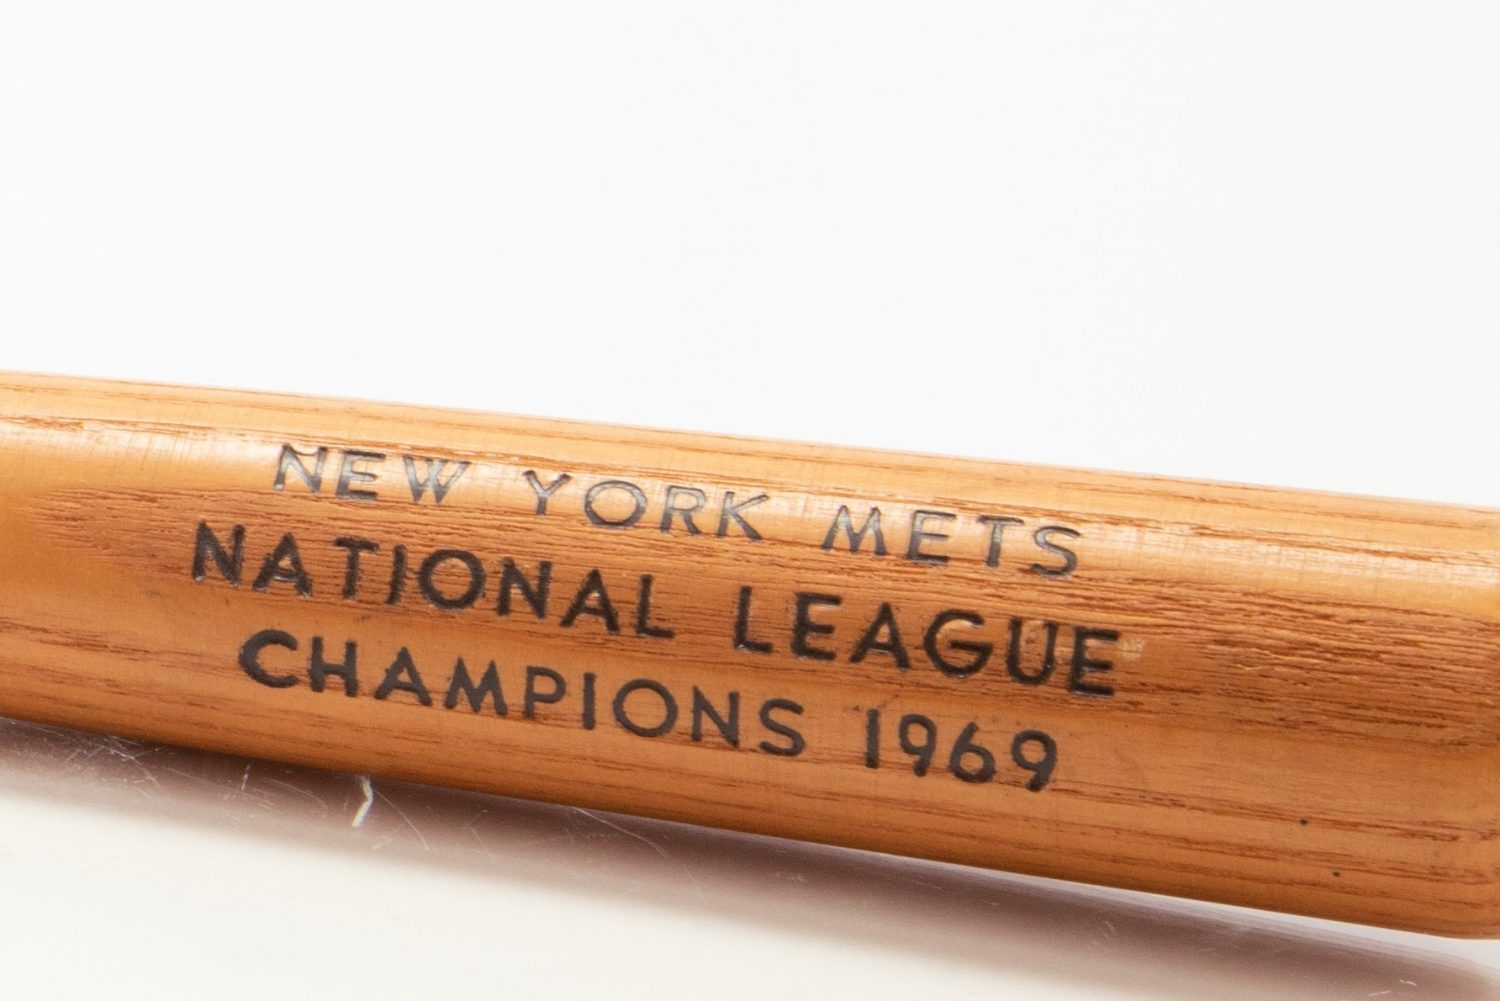 New York Mets NLCS Champions Commemorative Bat